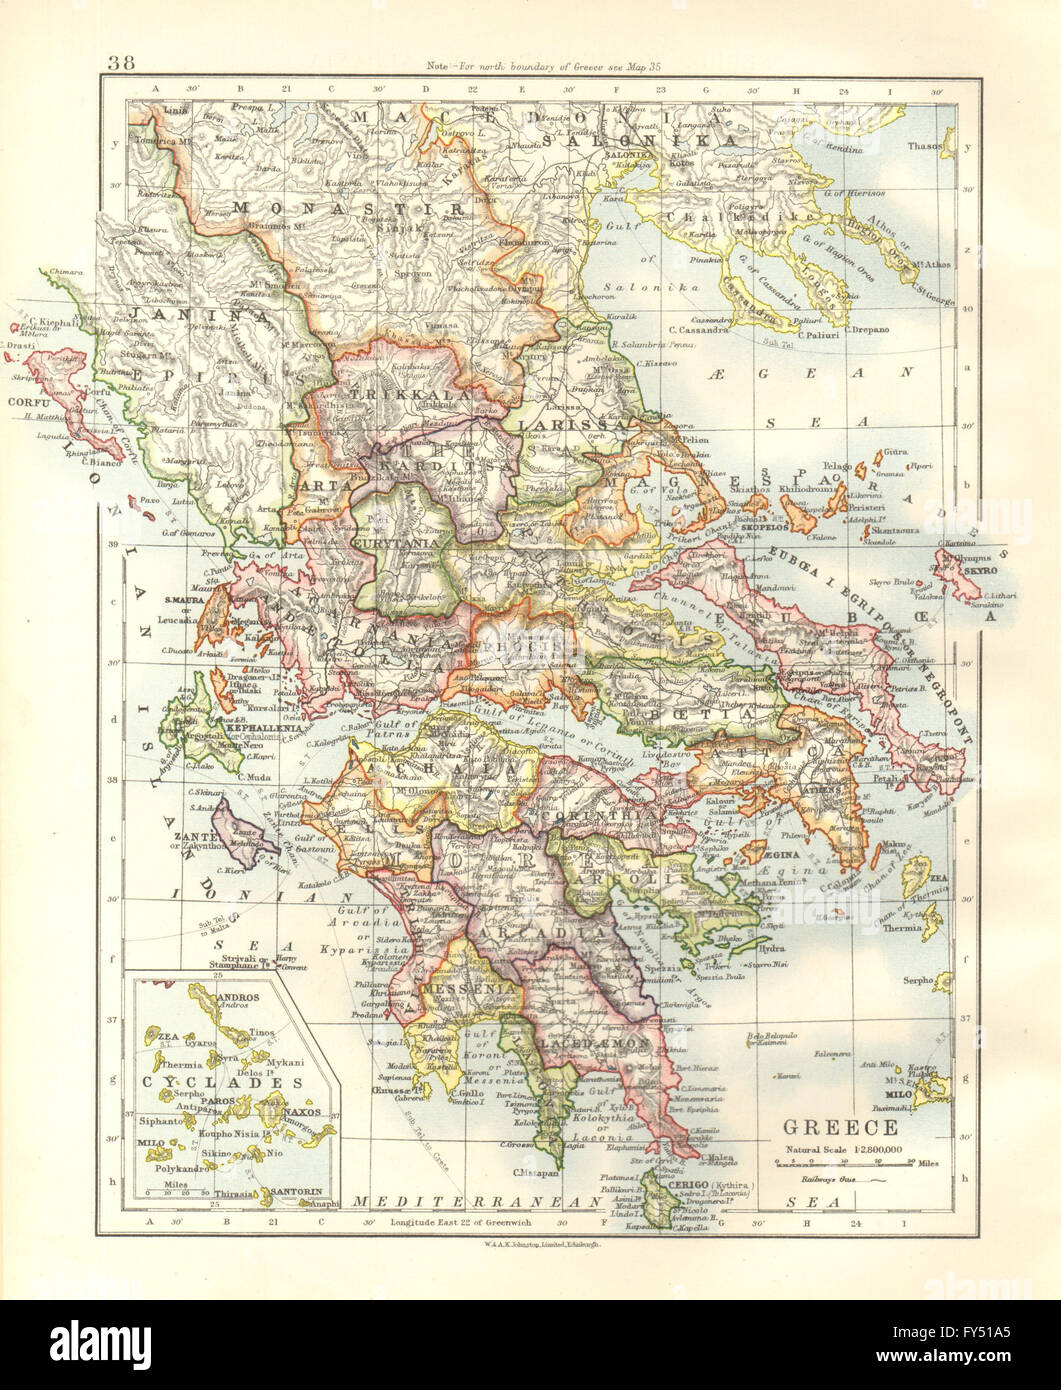 GREECE. Peloponnese Thessaly Attica Epirus Cyclades. JOHNSTON, 1920 old map Stock Photo